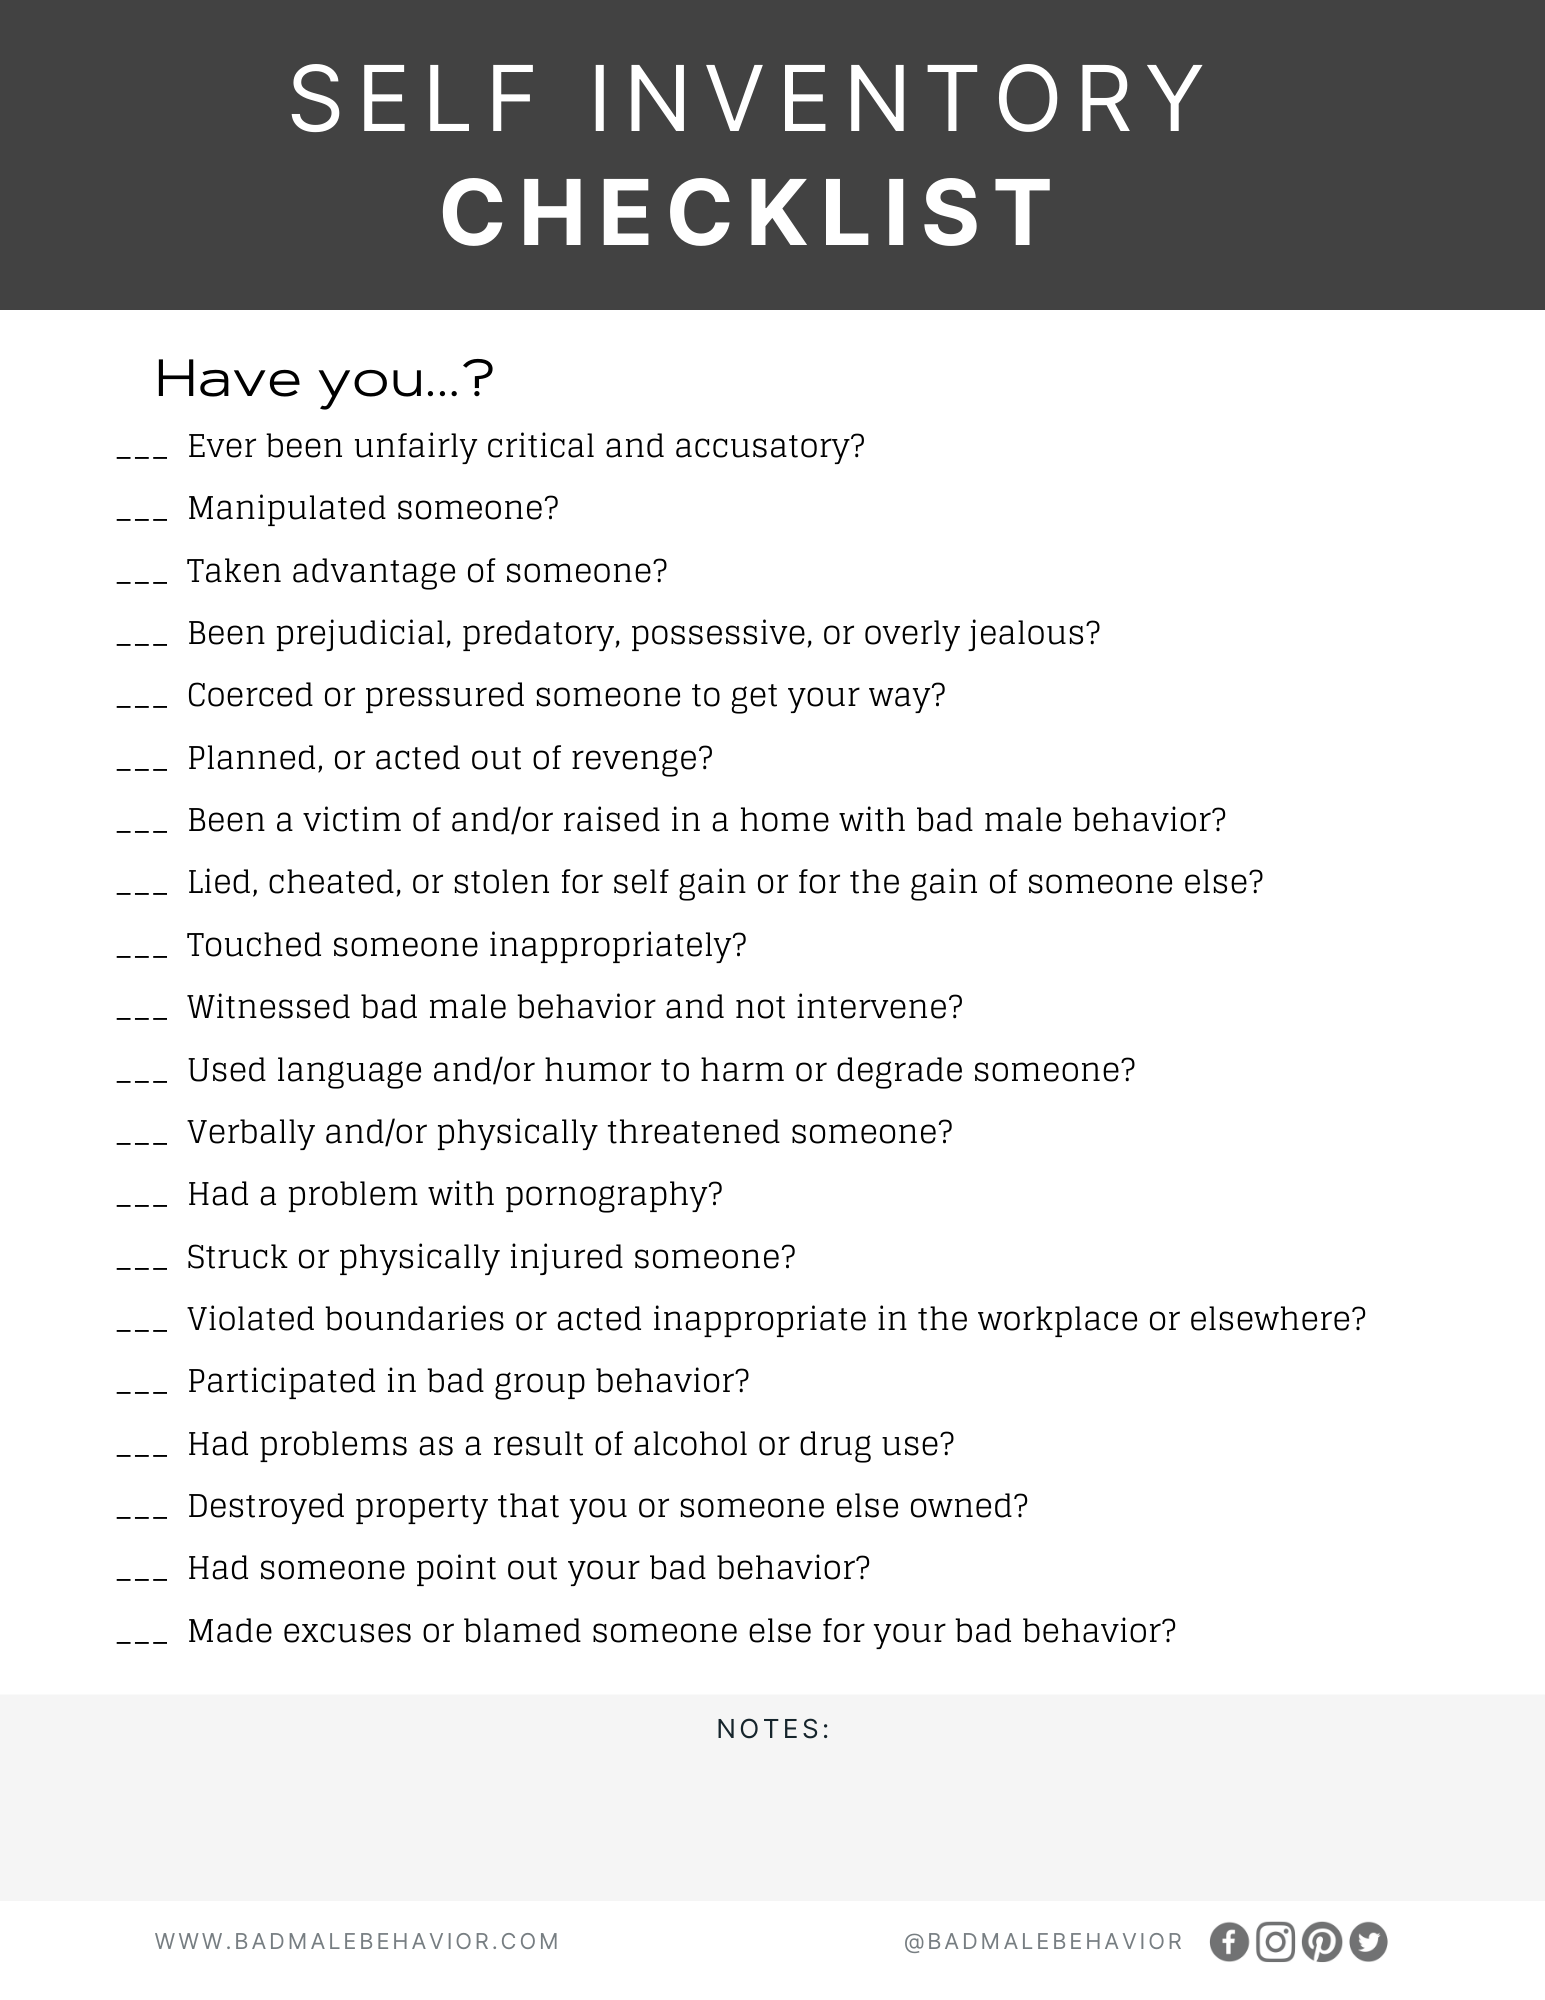 self inventory checklist to identify bad male behavior